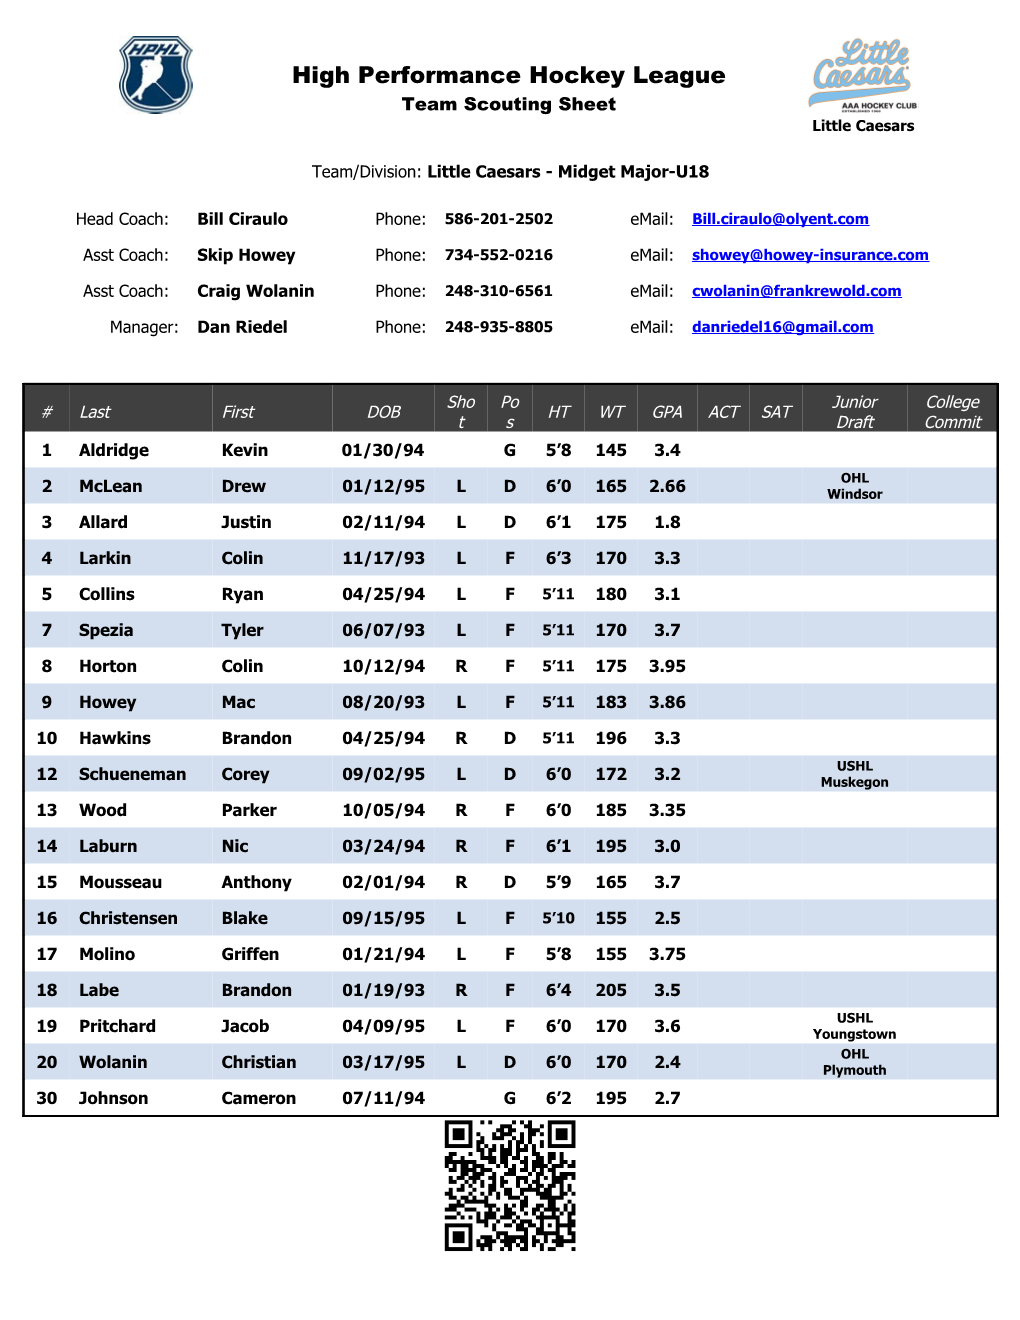 Team/Division: Little Caesars - Midget Major-U18